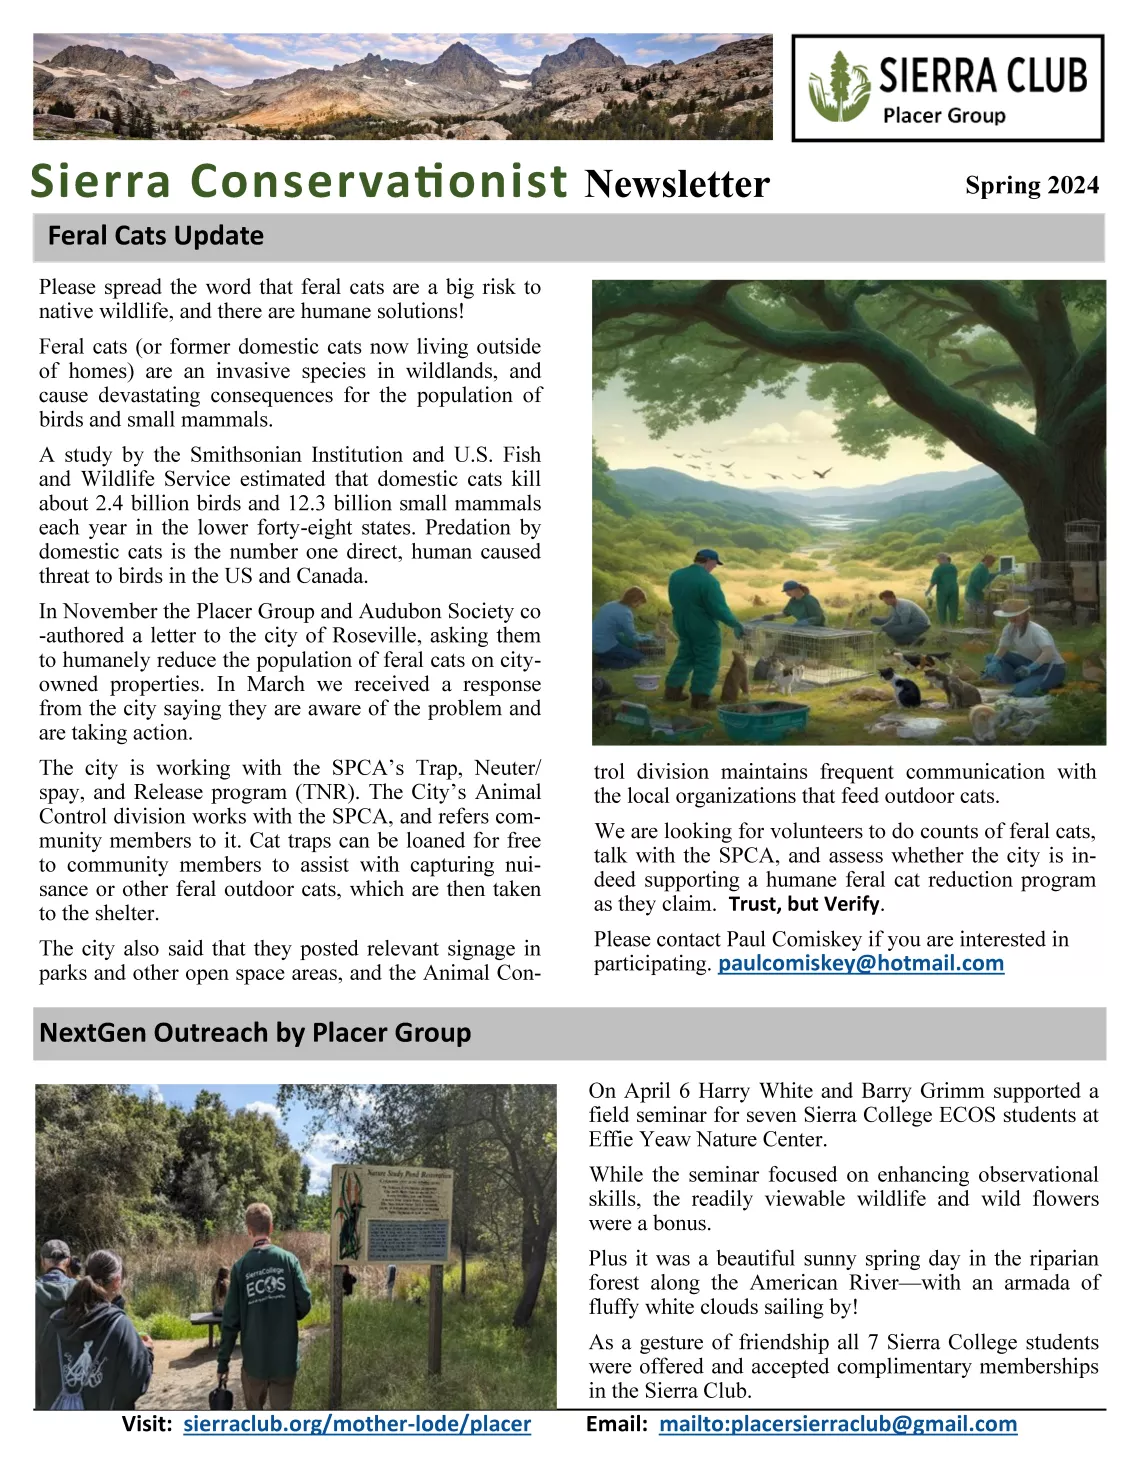 The Sierra Conservationist - Spring 2024